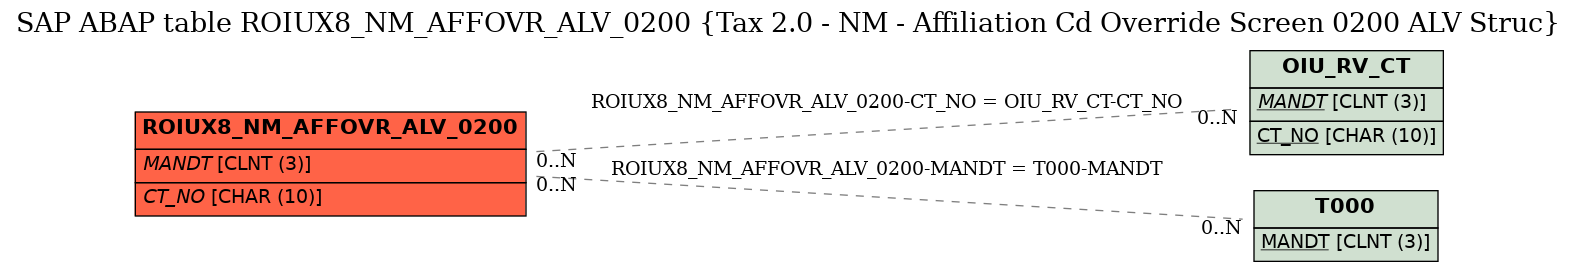 E-R Diagram for table ROIUX8_NM_AFFOVR_ALV_0200 (Tax 2.0 - NM - Affiliation Cd Override Screen 0200 ALV Struc)